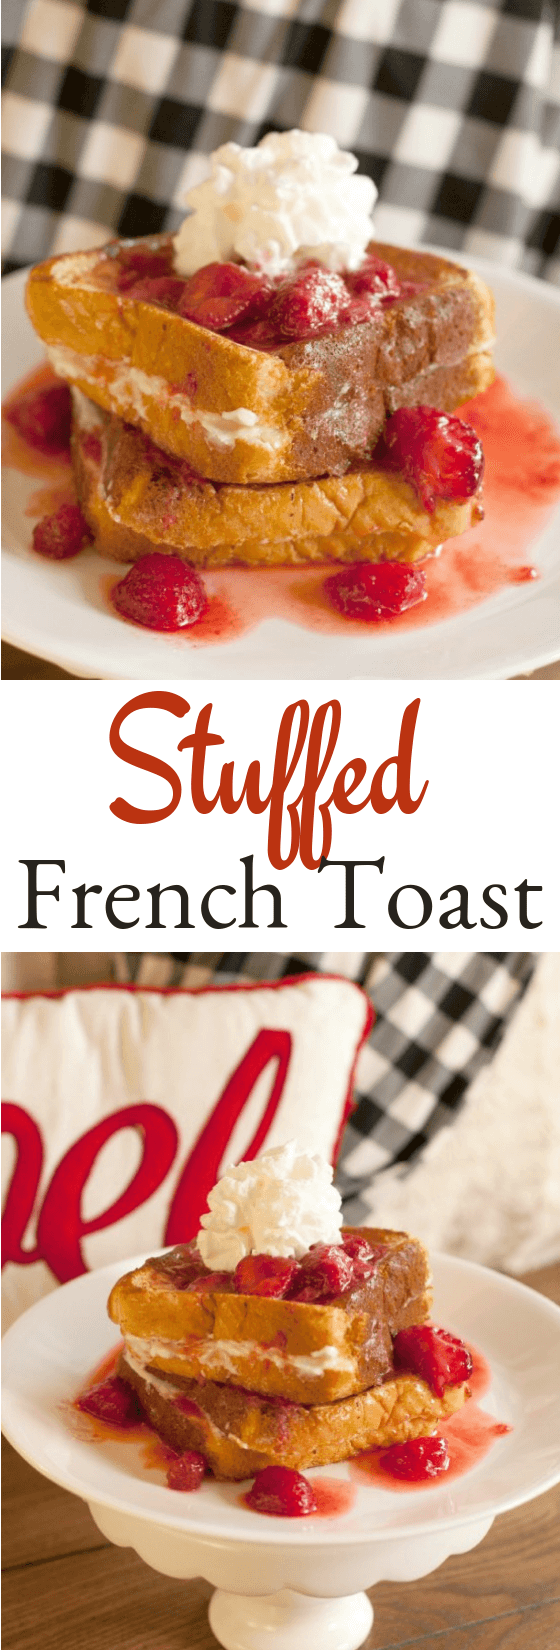 Stuffed French toast strawberries